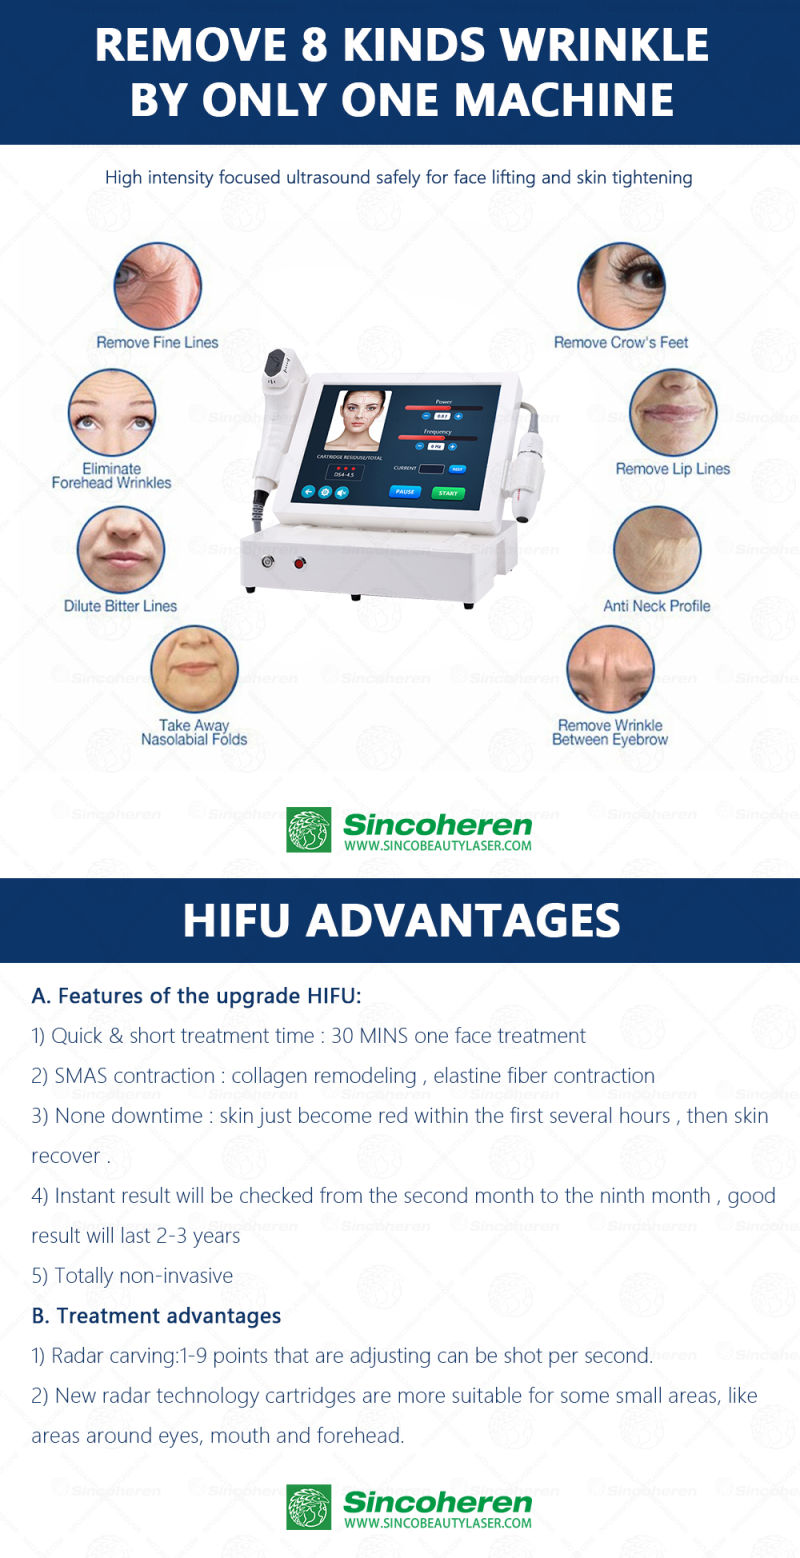 4D Hifu Skin Tightening 3D Hifu Device Wrinkle Removal Machine